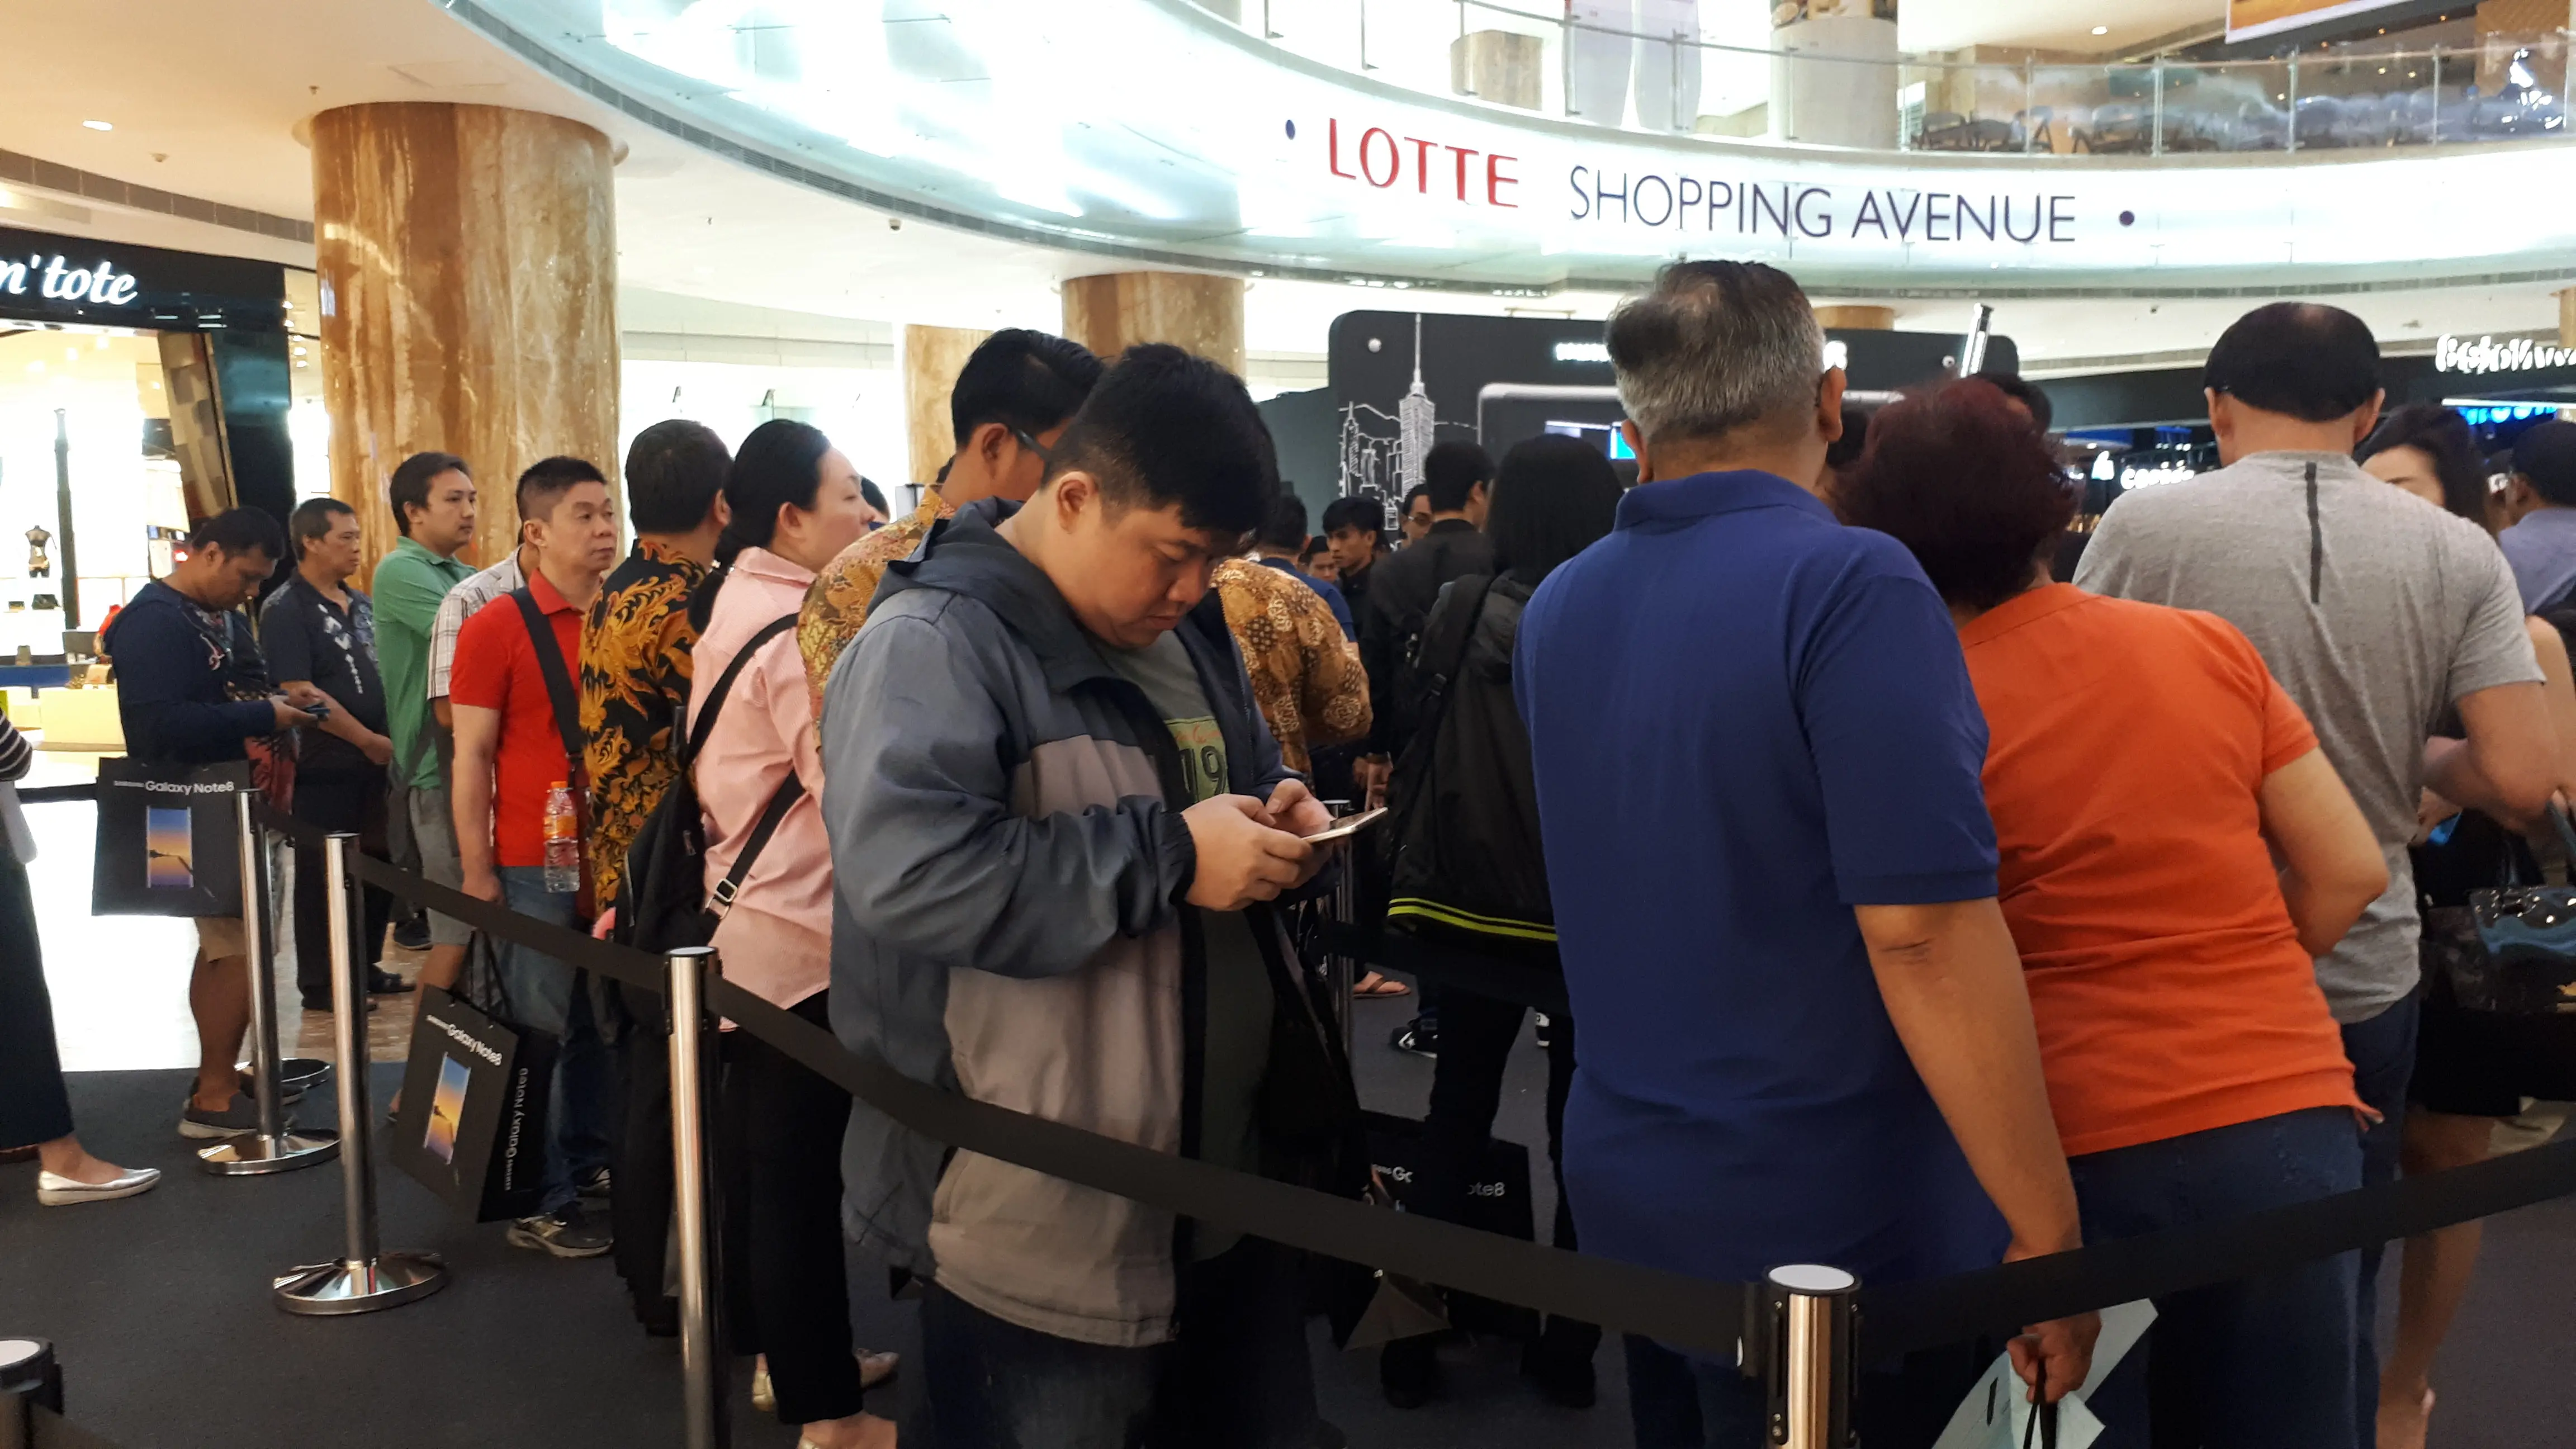 Penjualan perdana Samsung Galaxy Note 8 di Lotte Shopping Avenue, Jakarta, Jumat (29/9/2017). (Liputan6.com/Agustinus M Damar)